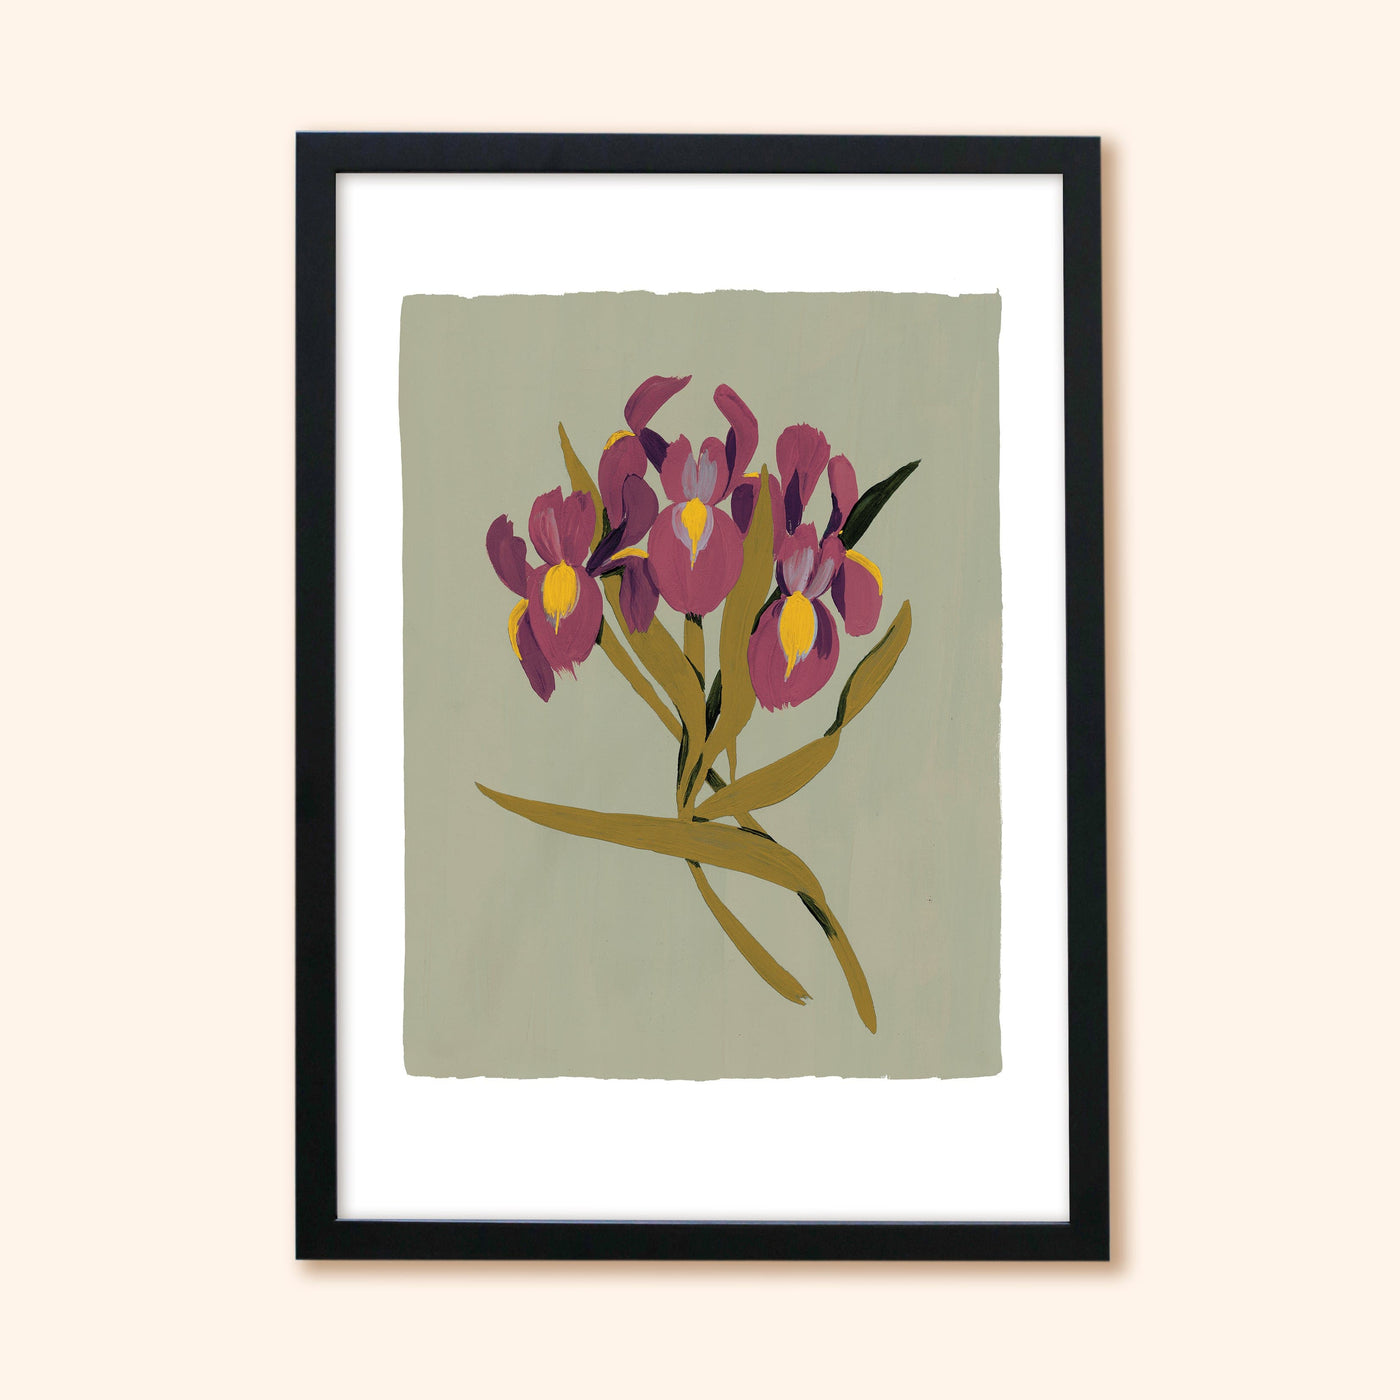 A Botanical Green Floral Print With Purple Iris's In A Black Frame - Annie Dornan Smith